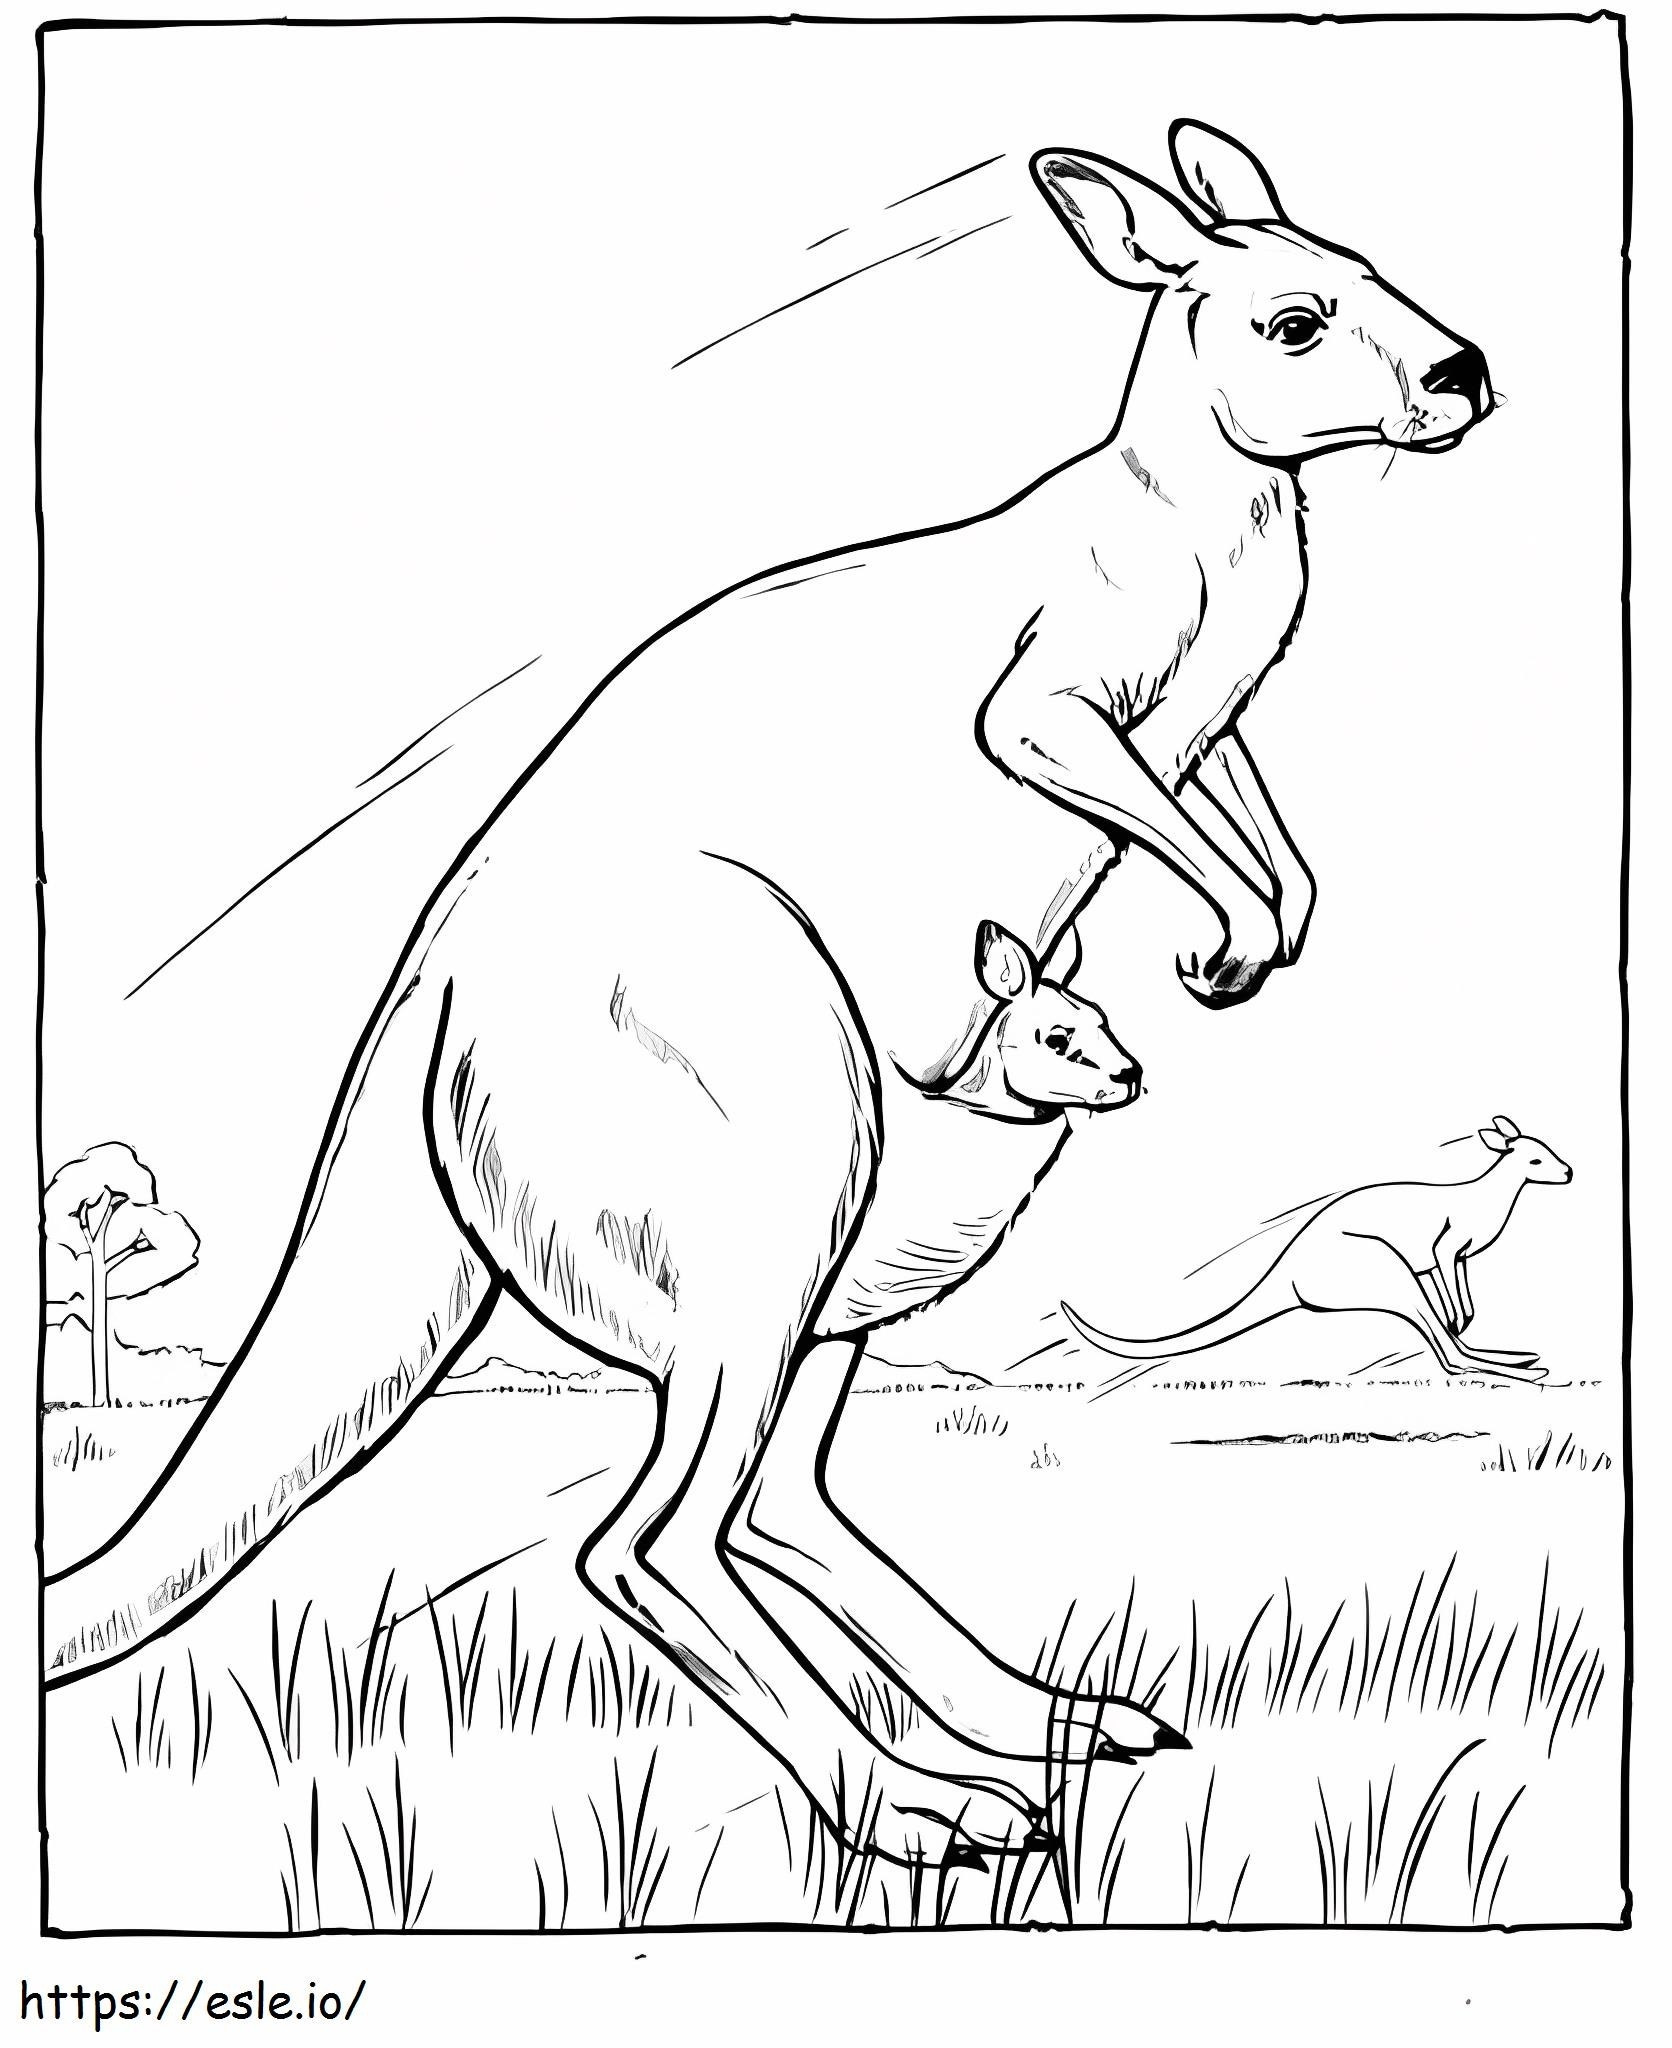 Three Kangaroos In Australia coloring page